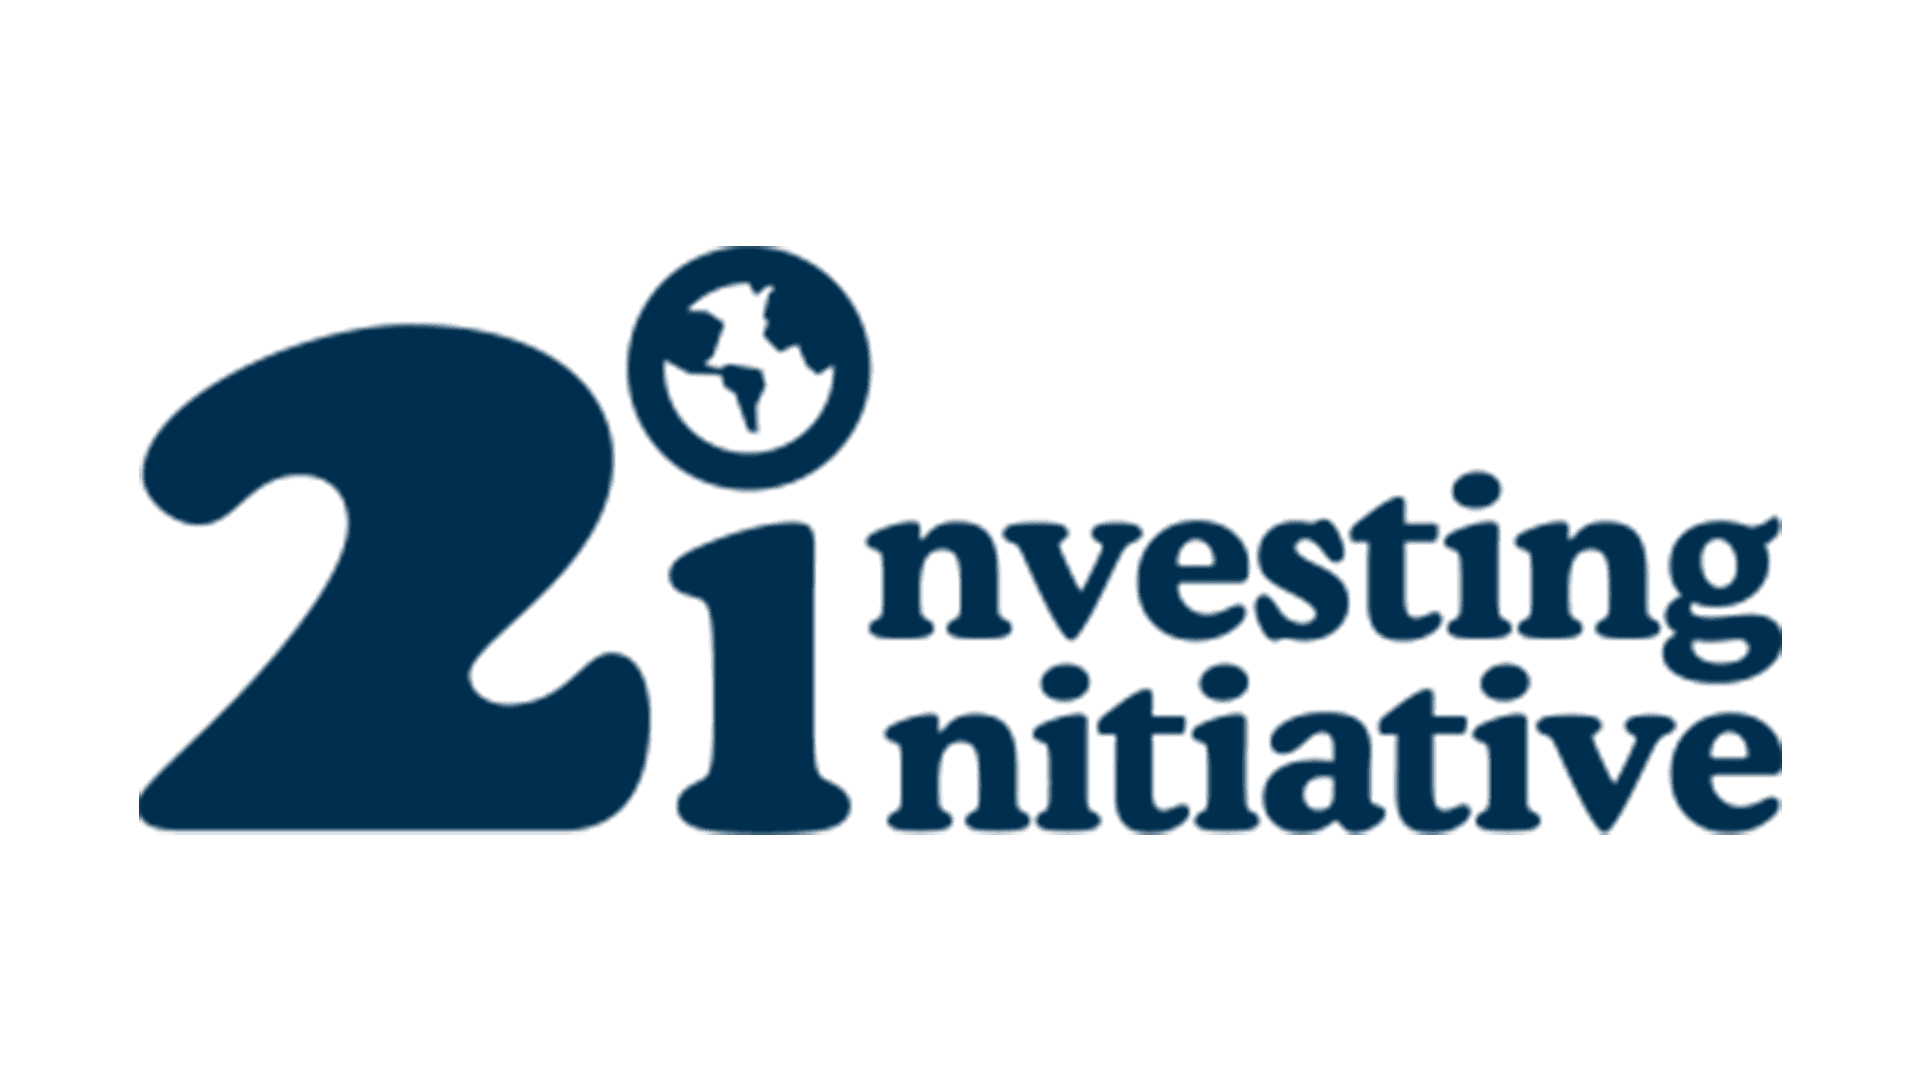 2° Investing Initiative's logo